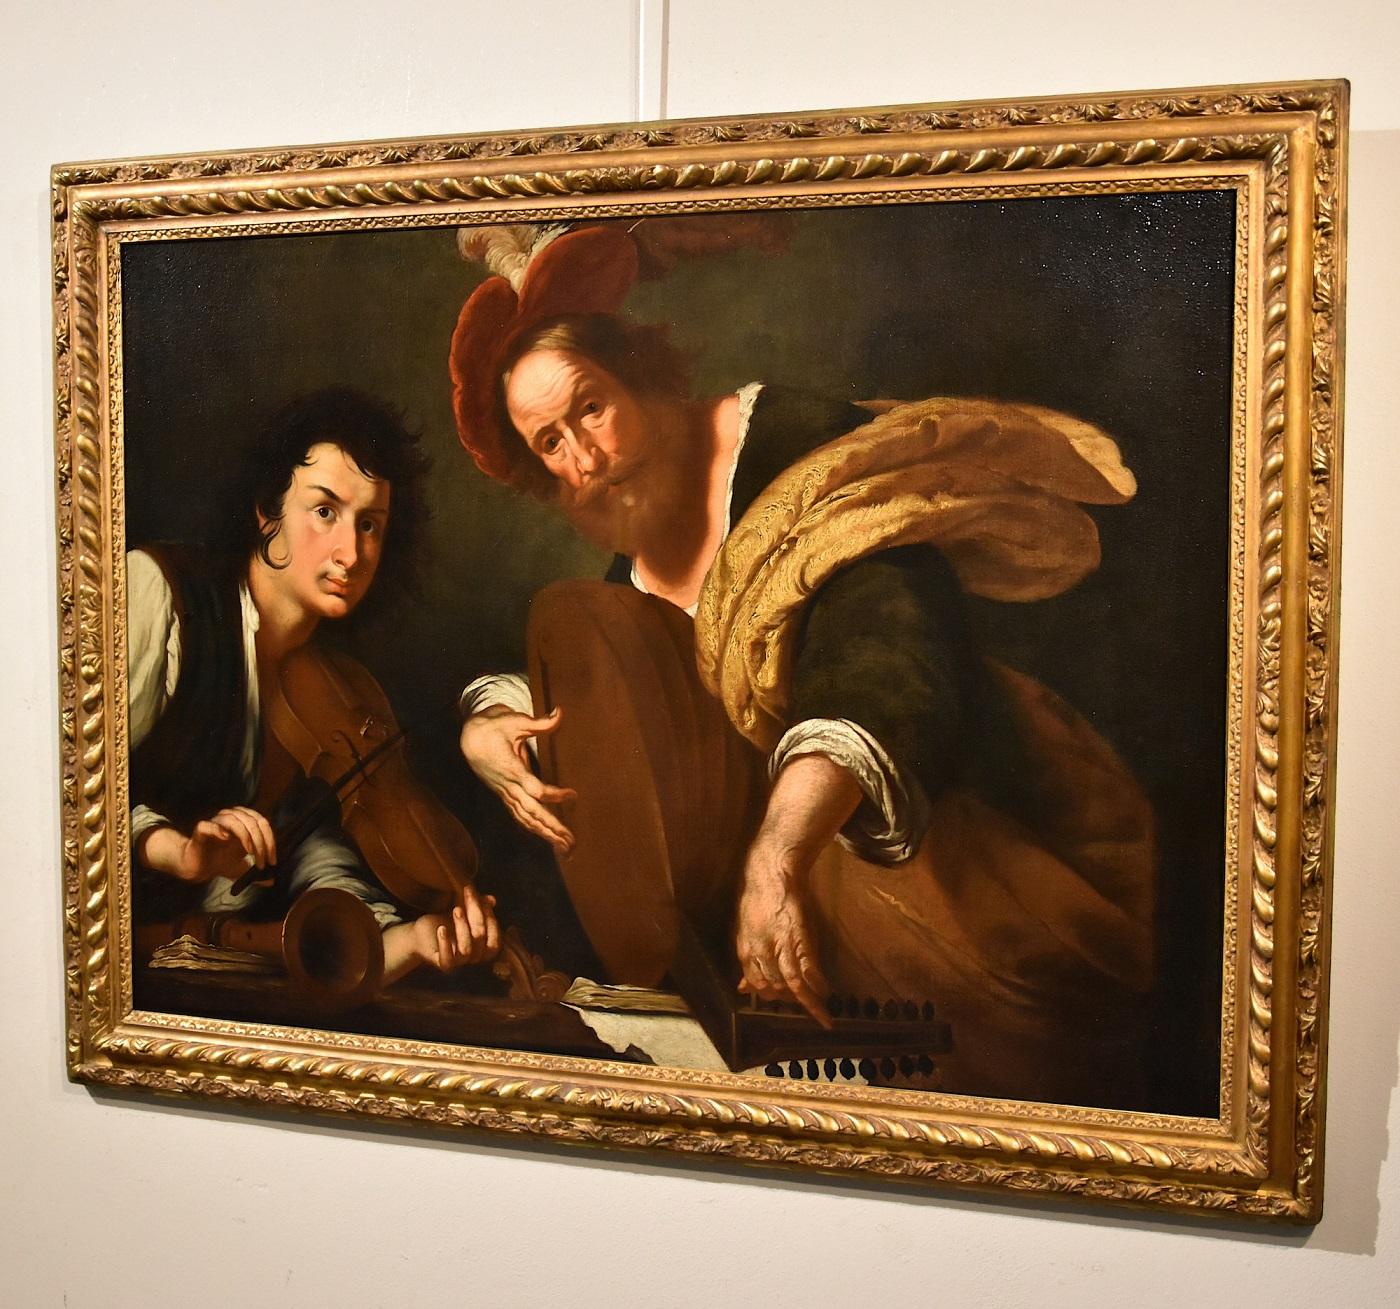 Concert Musicians Strozzi Paint Oil on canvas Old master 17th Century Italian 12